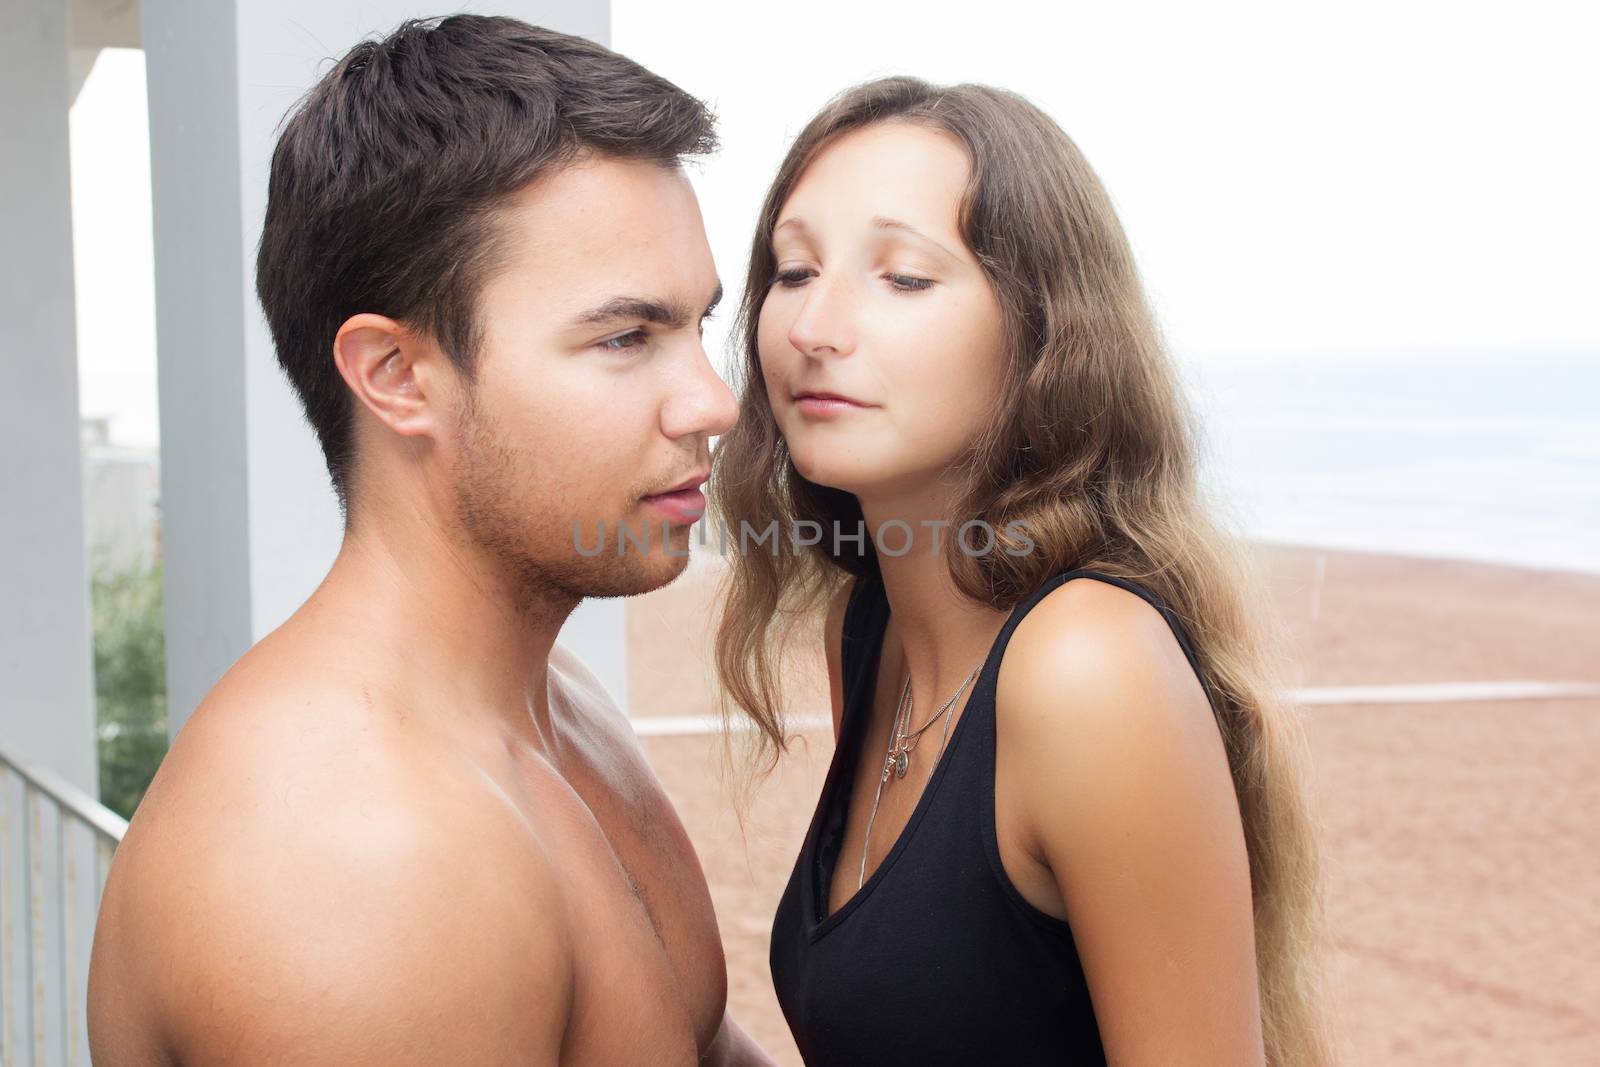 Summer, sea. Attractive couple on the beach